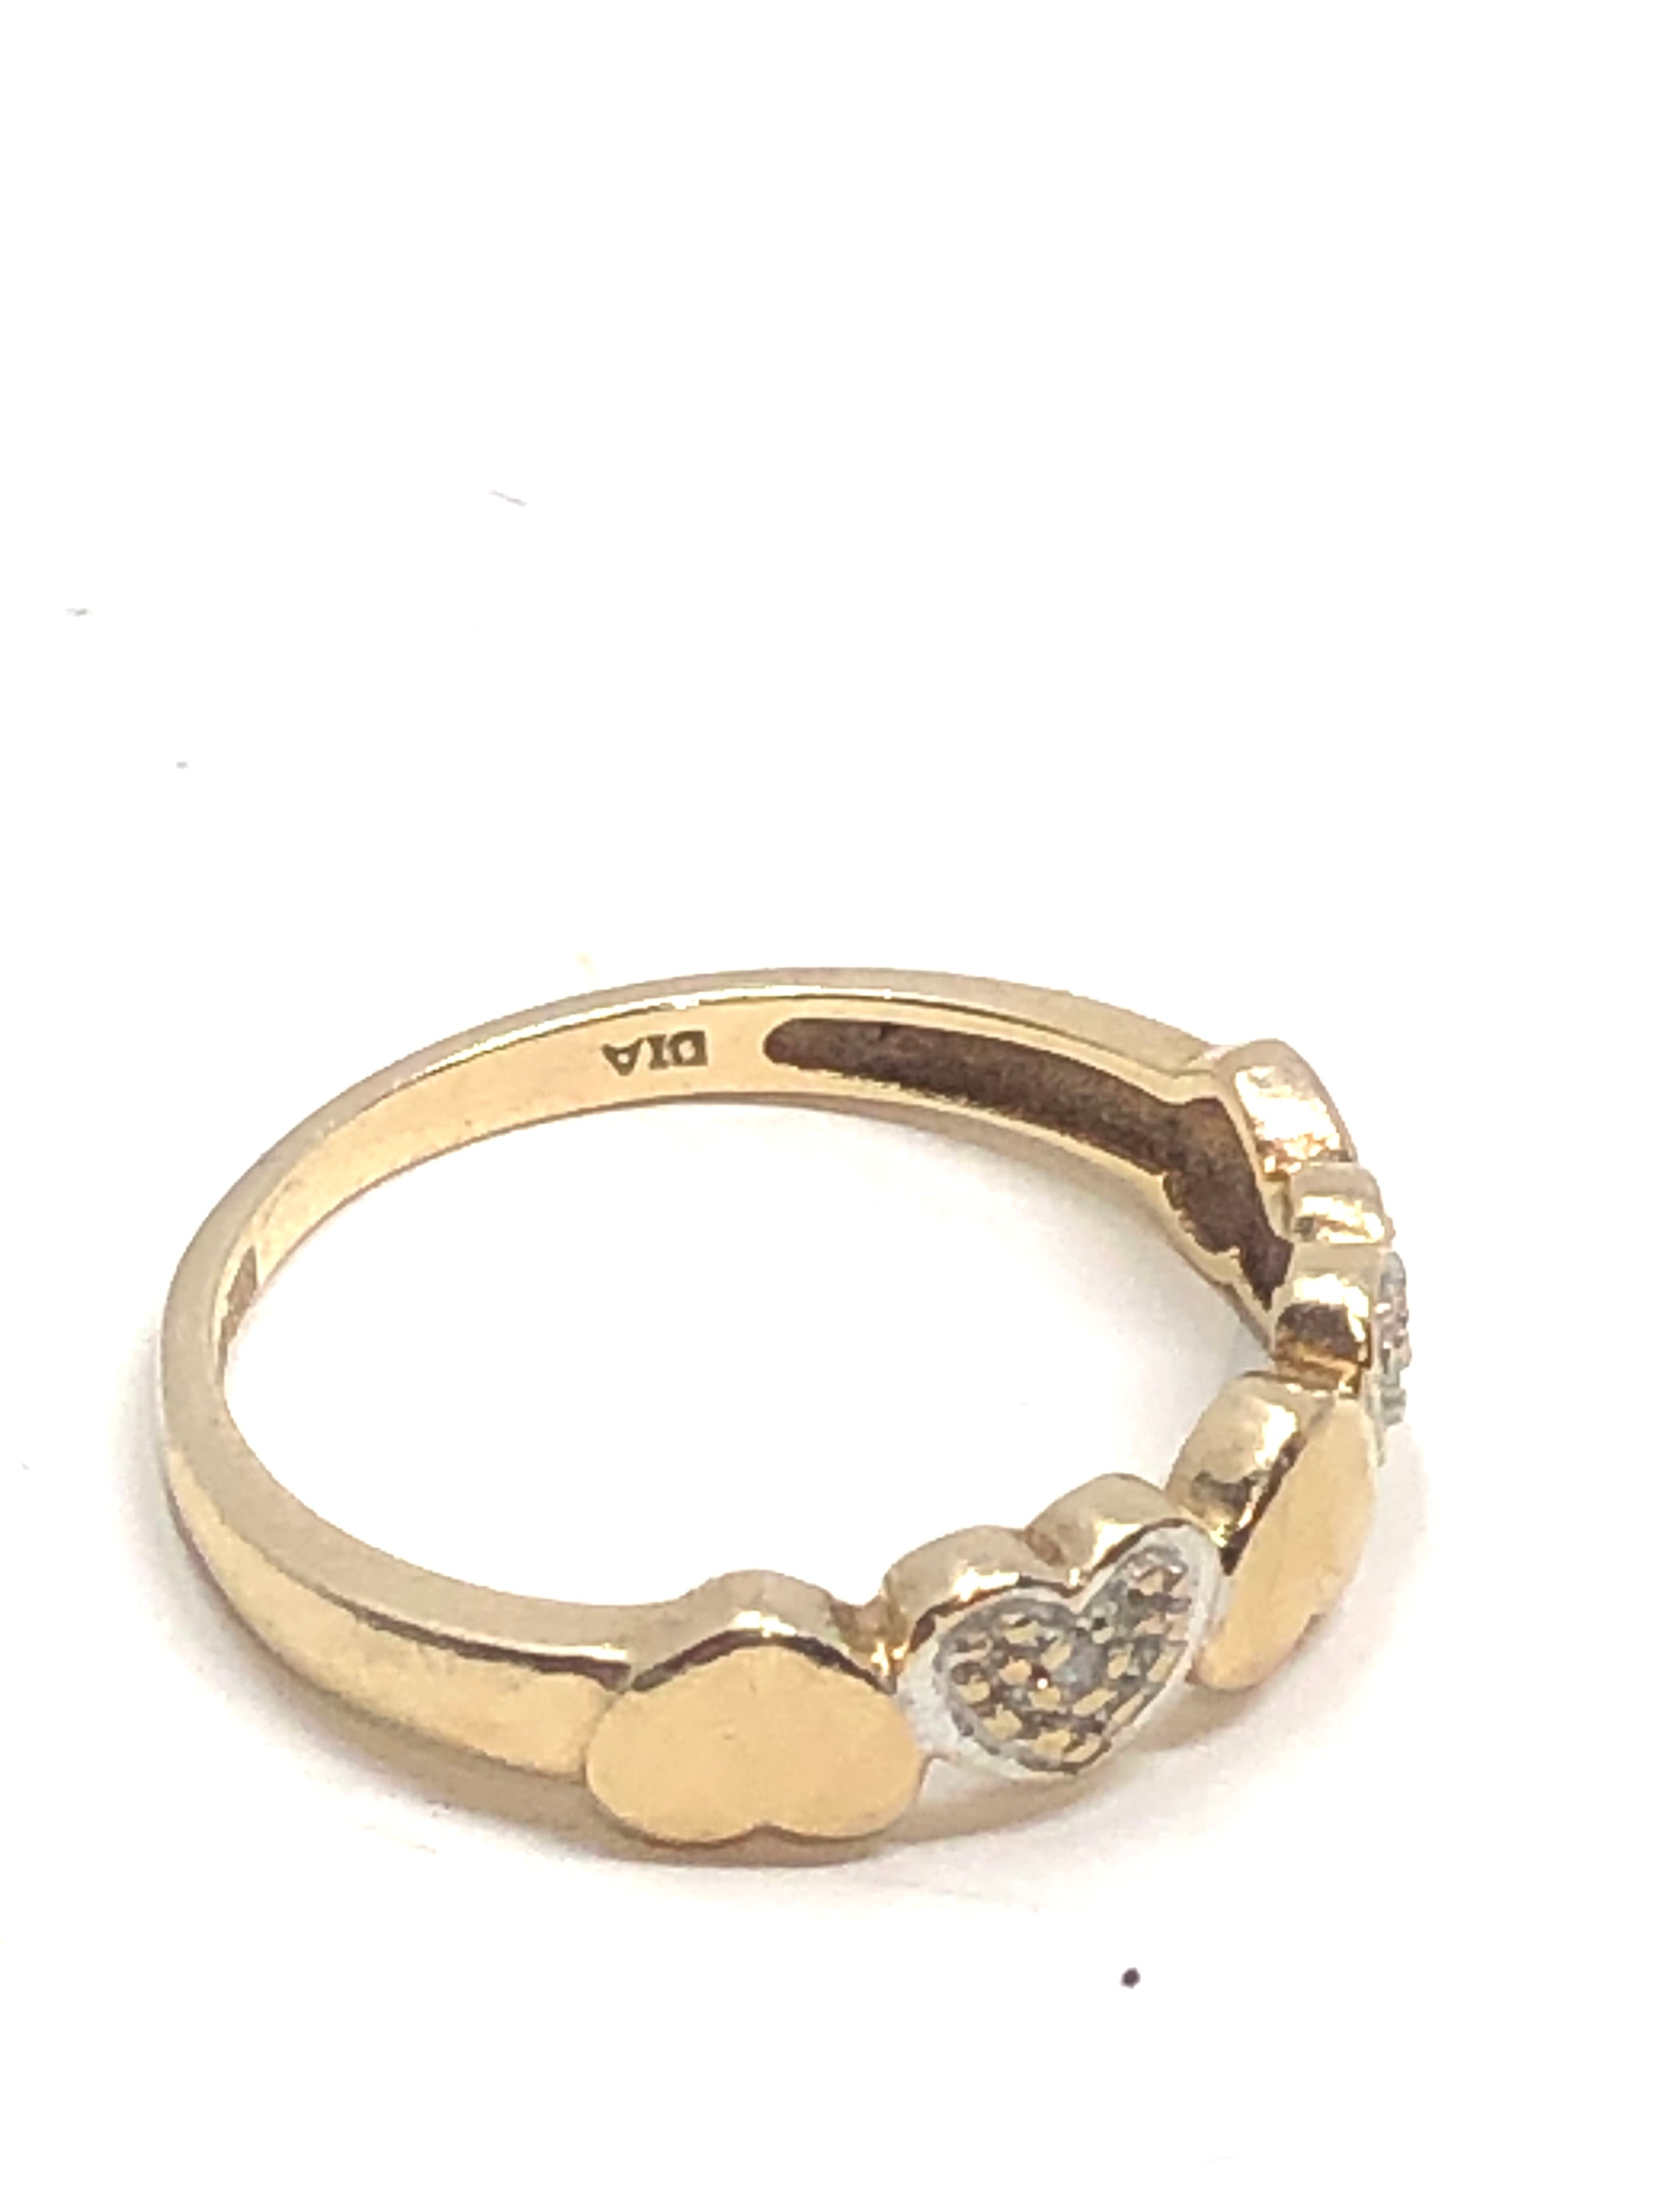 9ct gold diamond heart design ring (1.7g) - Image 2 of 3